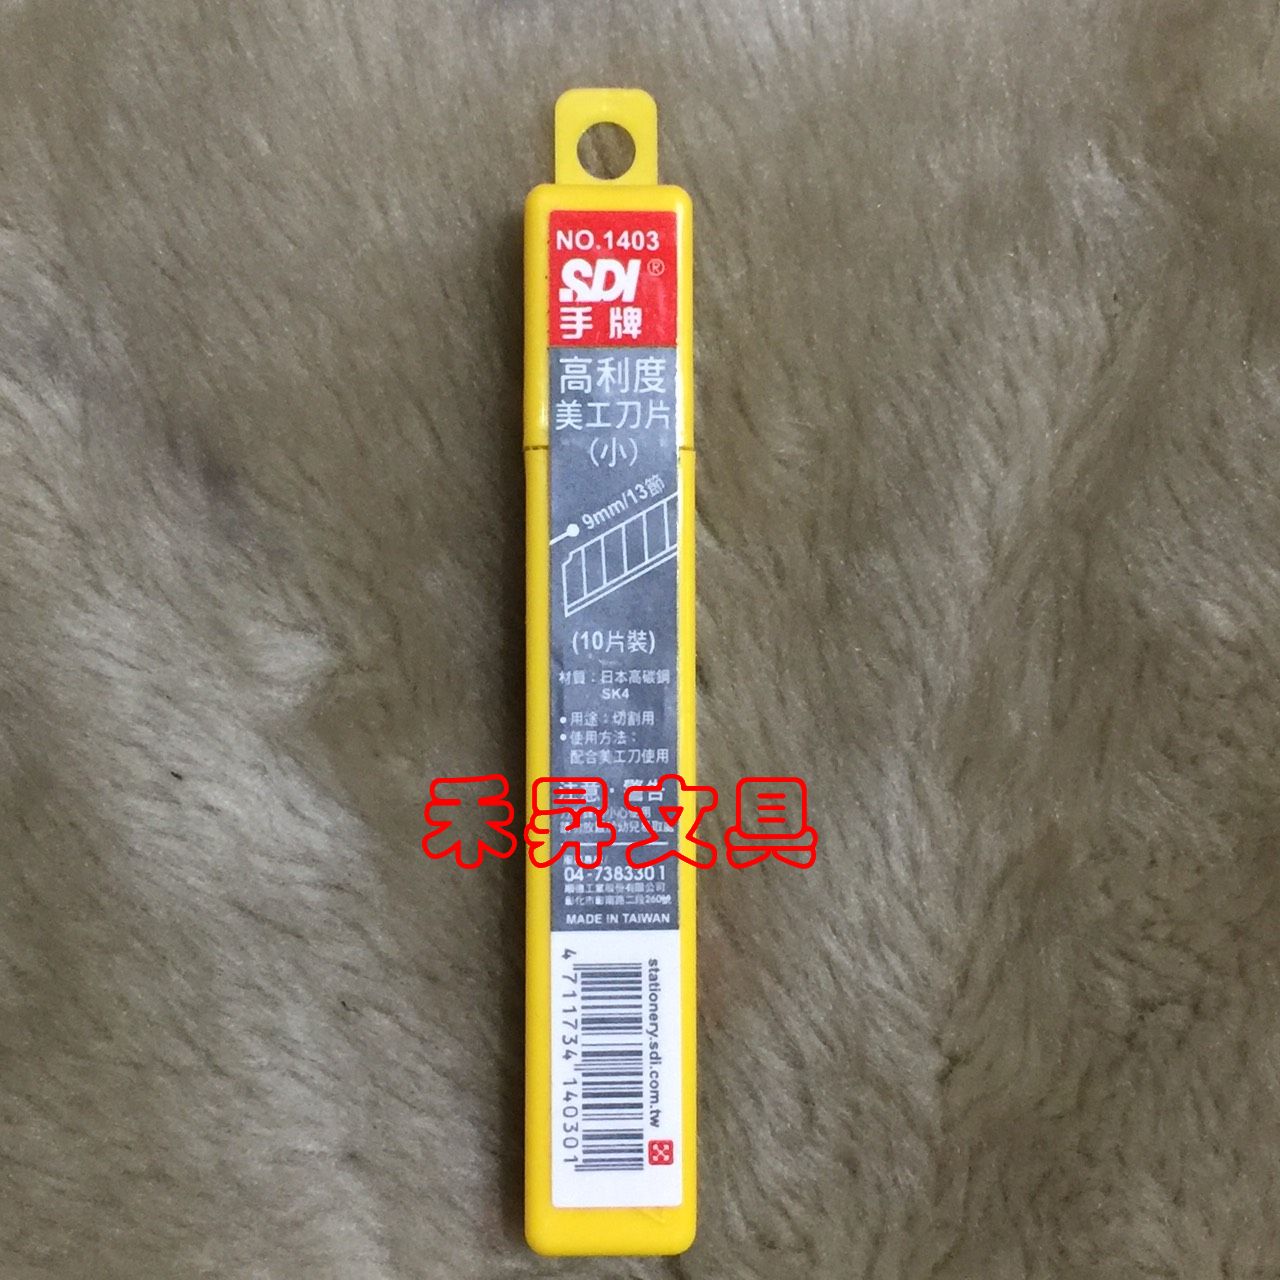 SDI 手牌小美工刀片-10入 NO.1403 替換刀片、採用日本高碳鋼製作、尺寸：9mm、特價每盒：24元 - 20180713151503-466273071.jpg(圖)